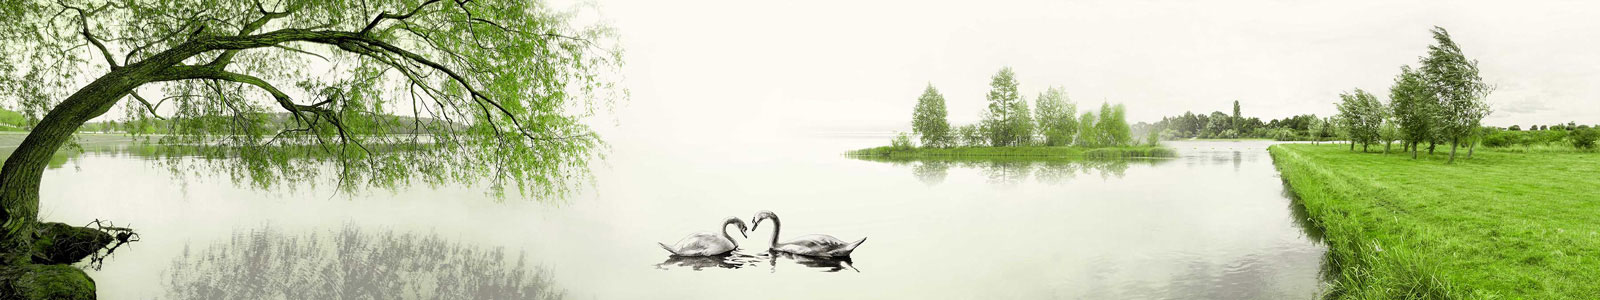 №4495 - Нарисованные лебеди на озере